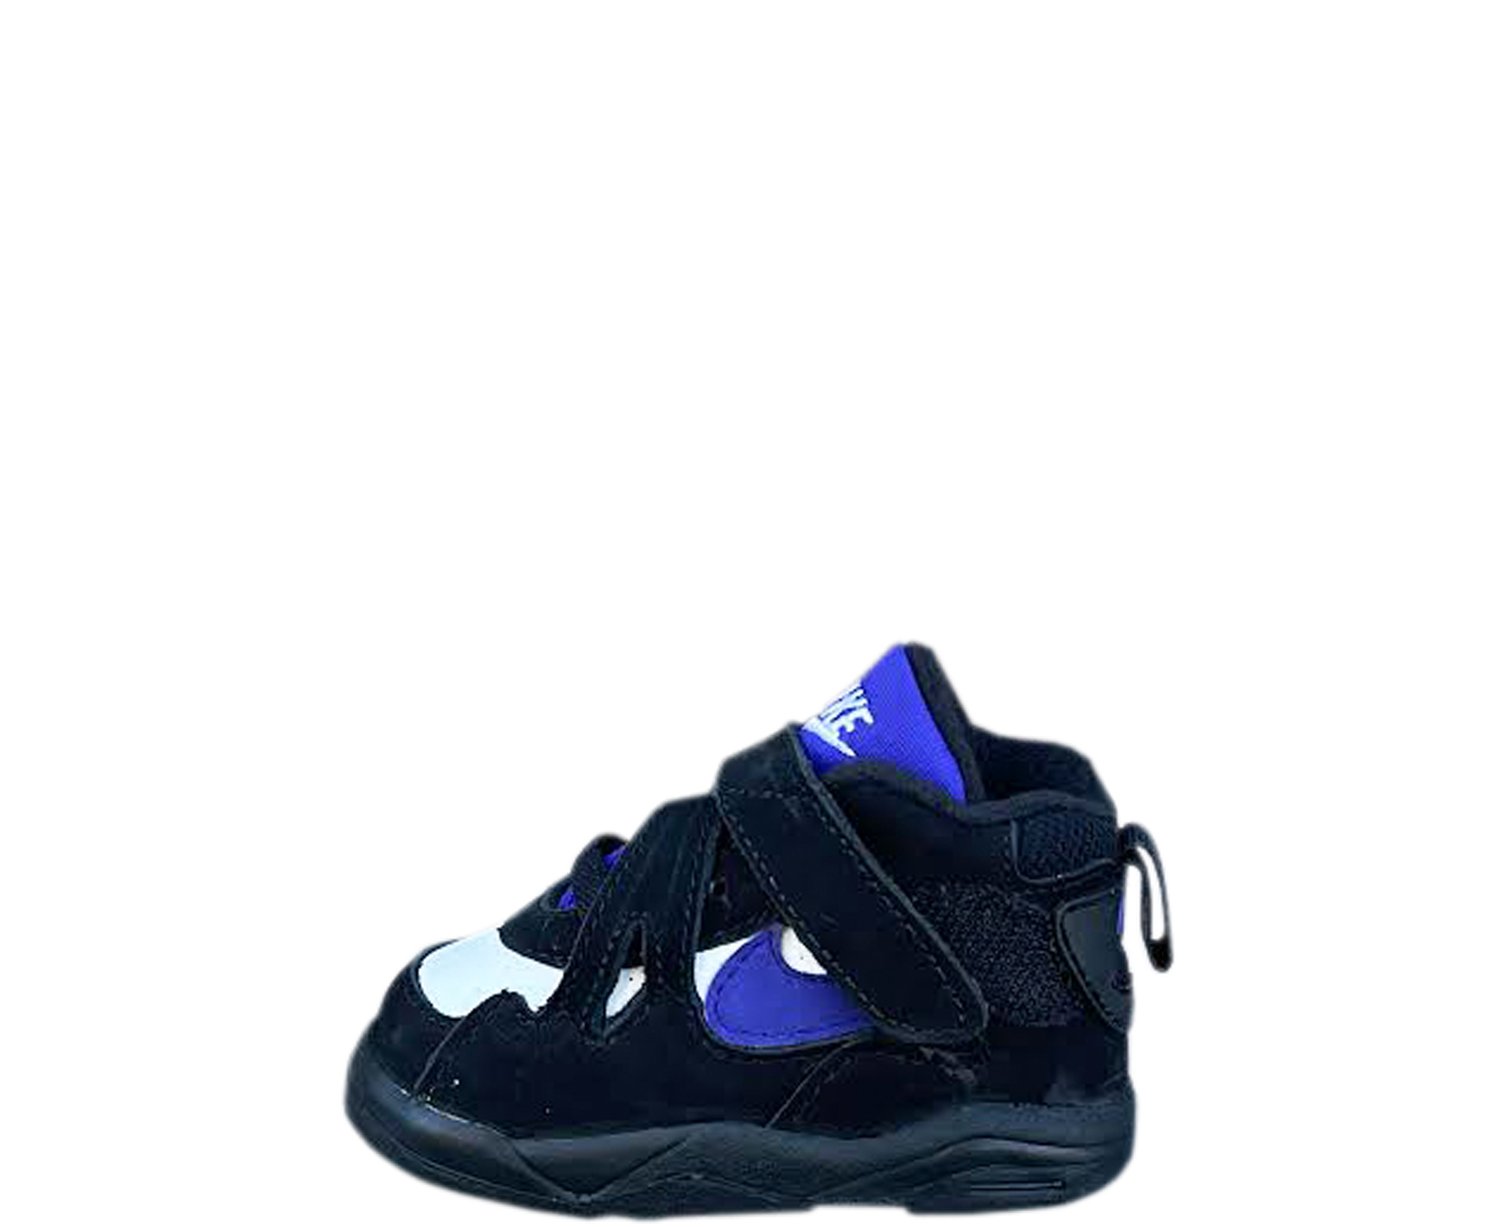 fecha límite Capataz vistazo Baby Nike Force CB 'Charles Barkley' Black/ Dark Concord-White (Size 2.5c)  DS “OG Release” — Roots